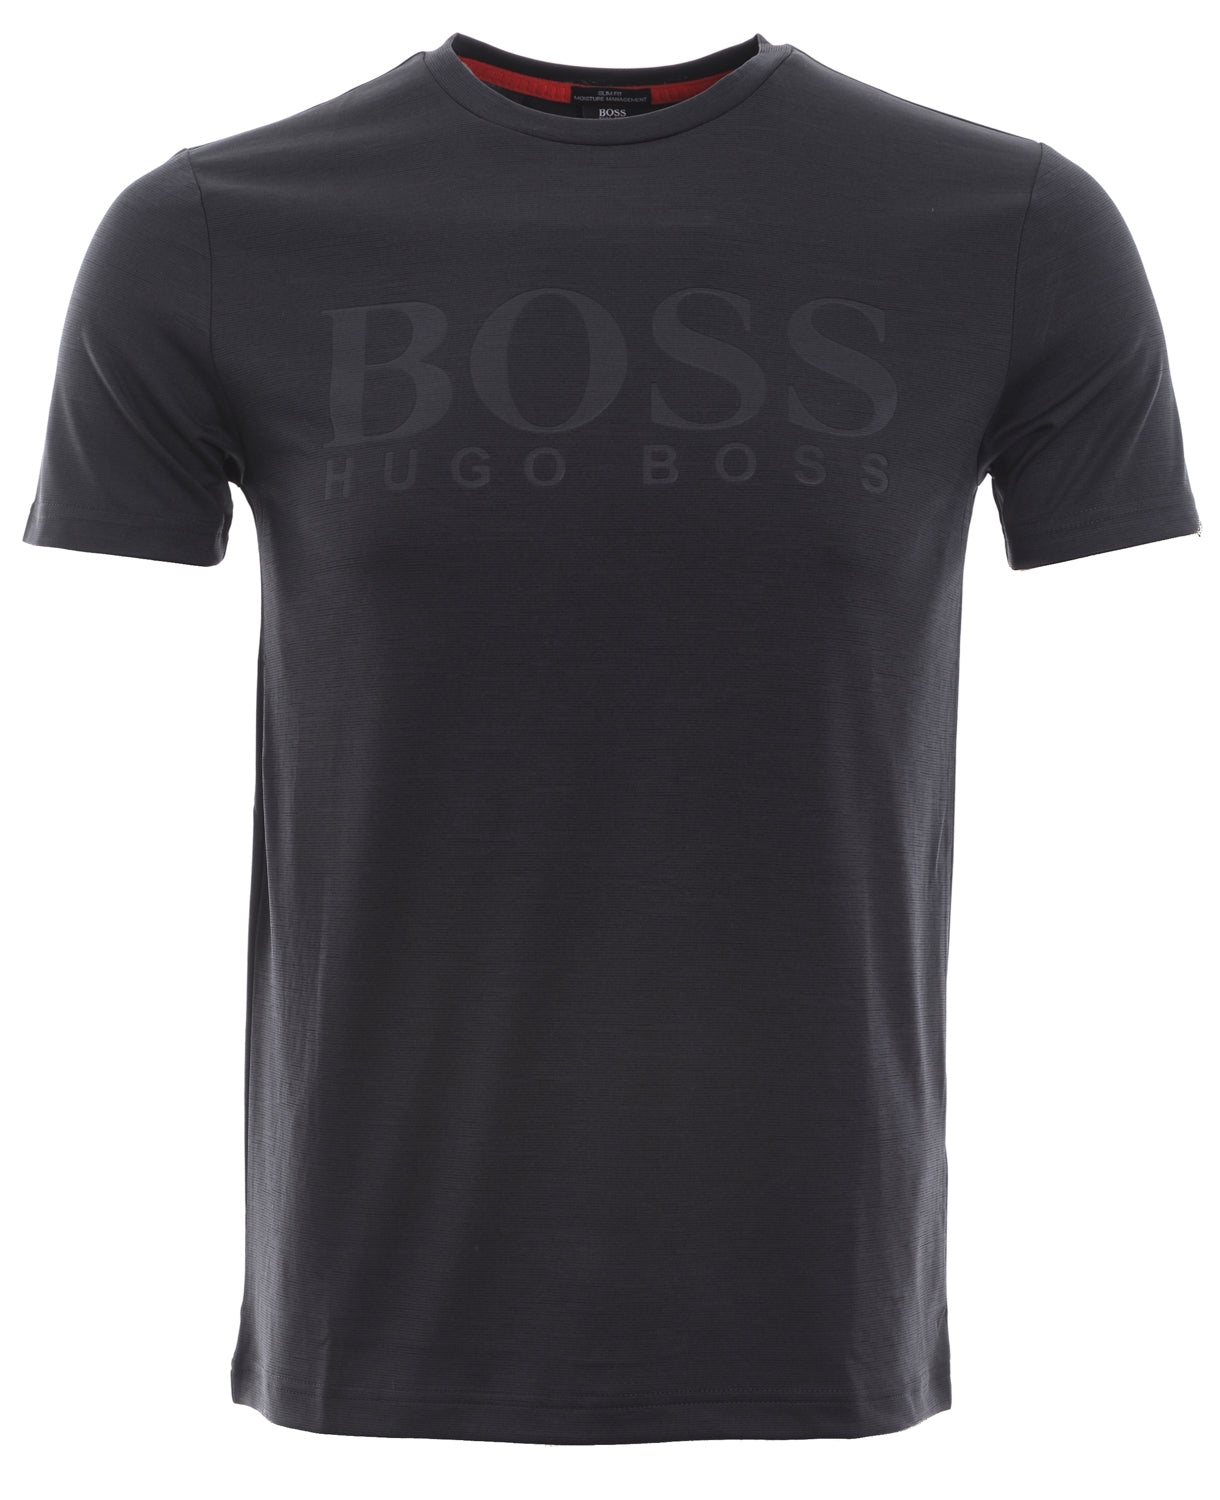 BOSS Teetech 1 T-Shirt in Black